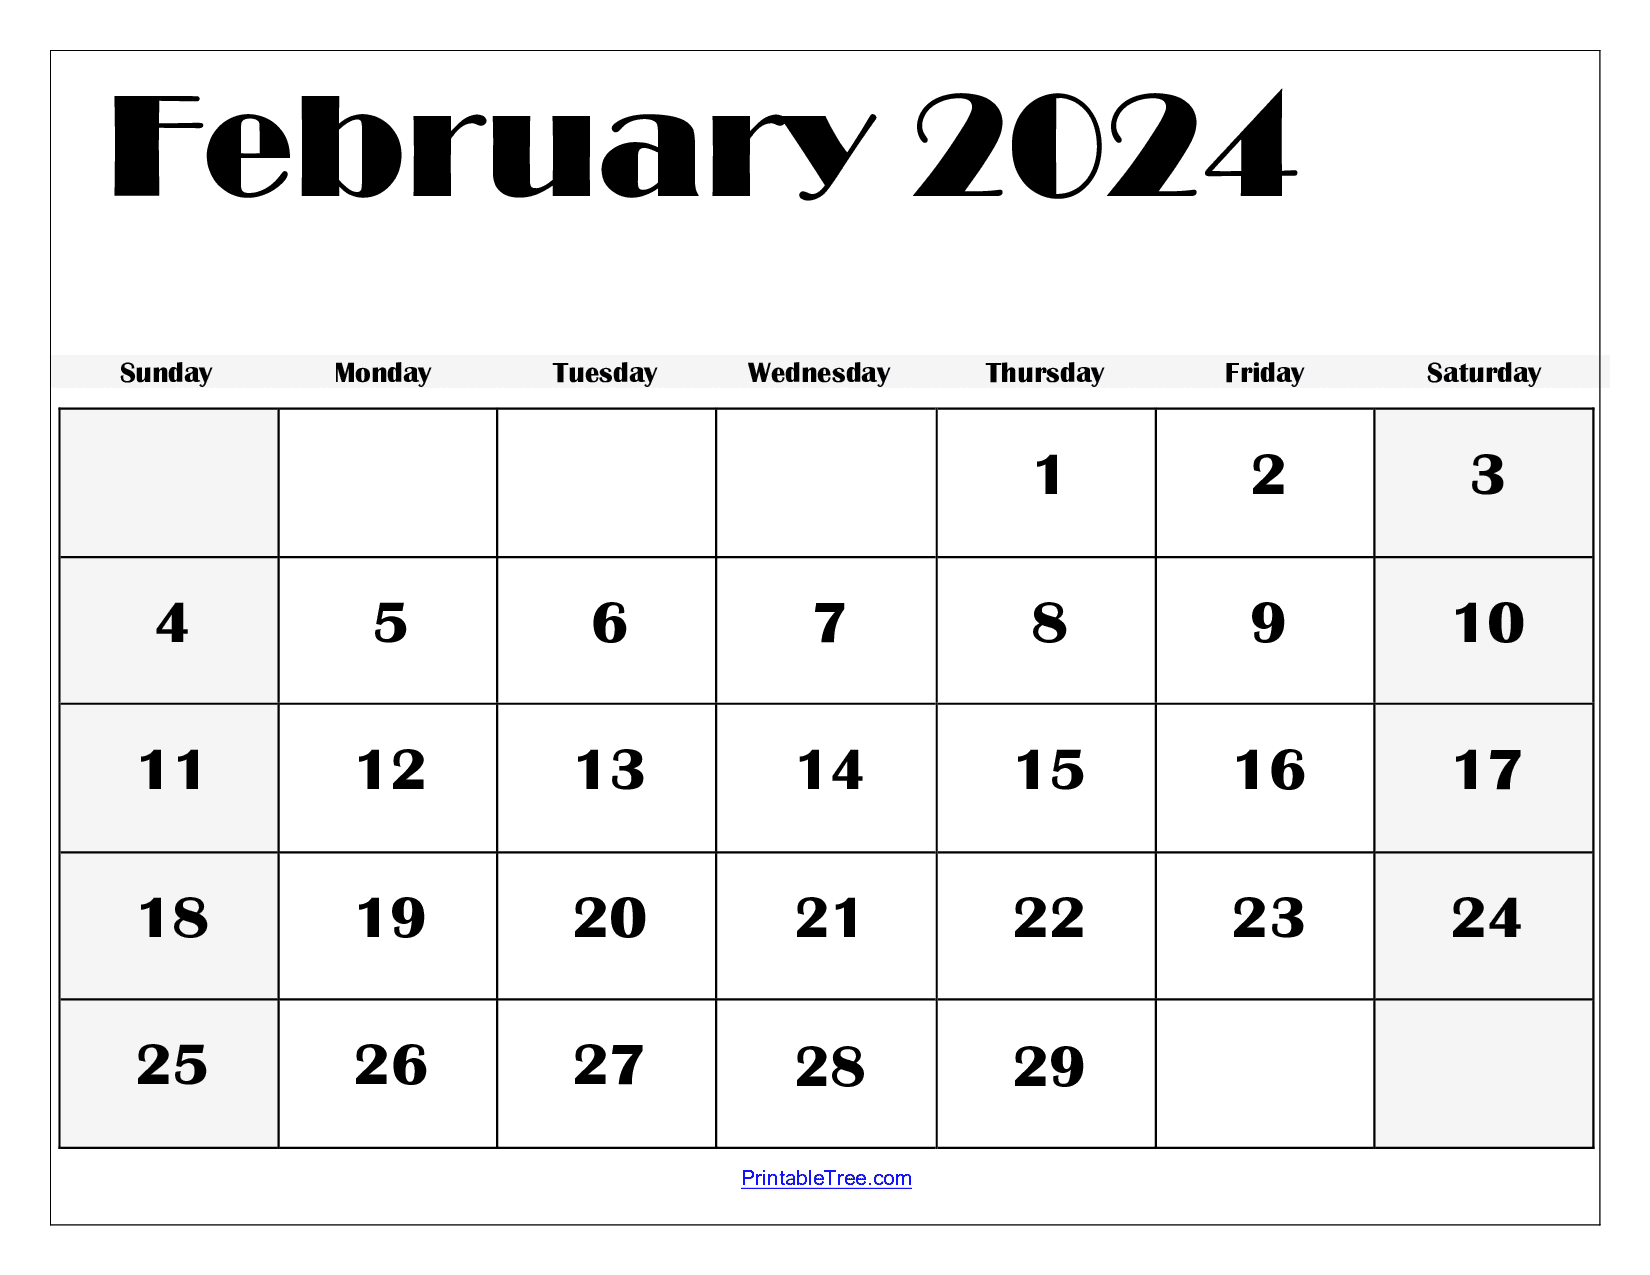 February 2024 Calendar Printable Pdf Template With Holidays for Blank Calendar Template February 2024 Printable